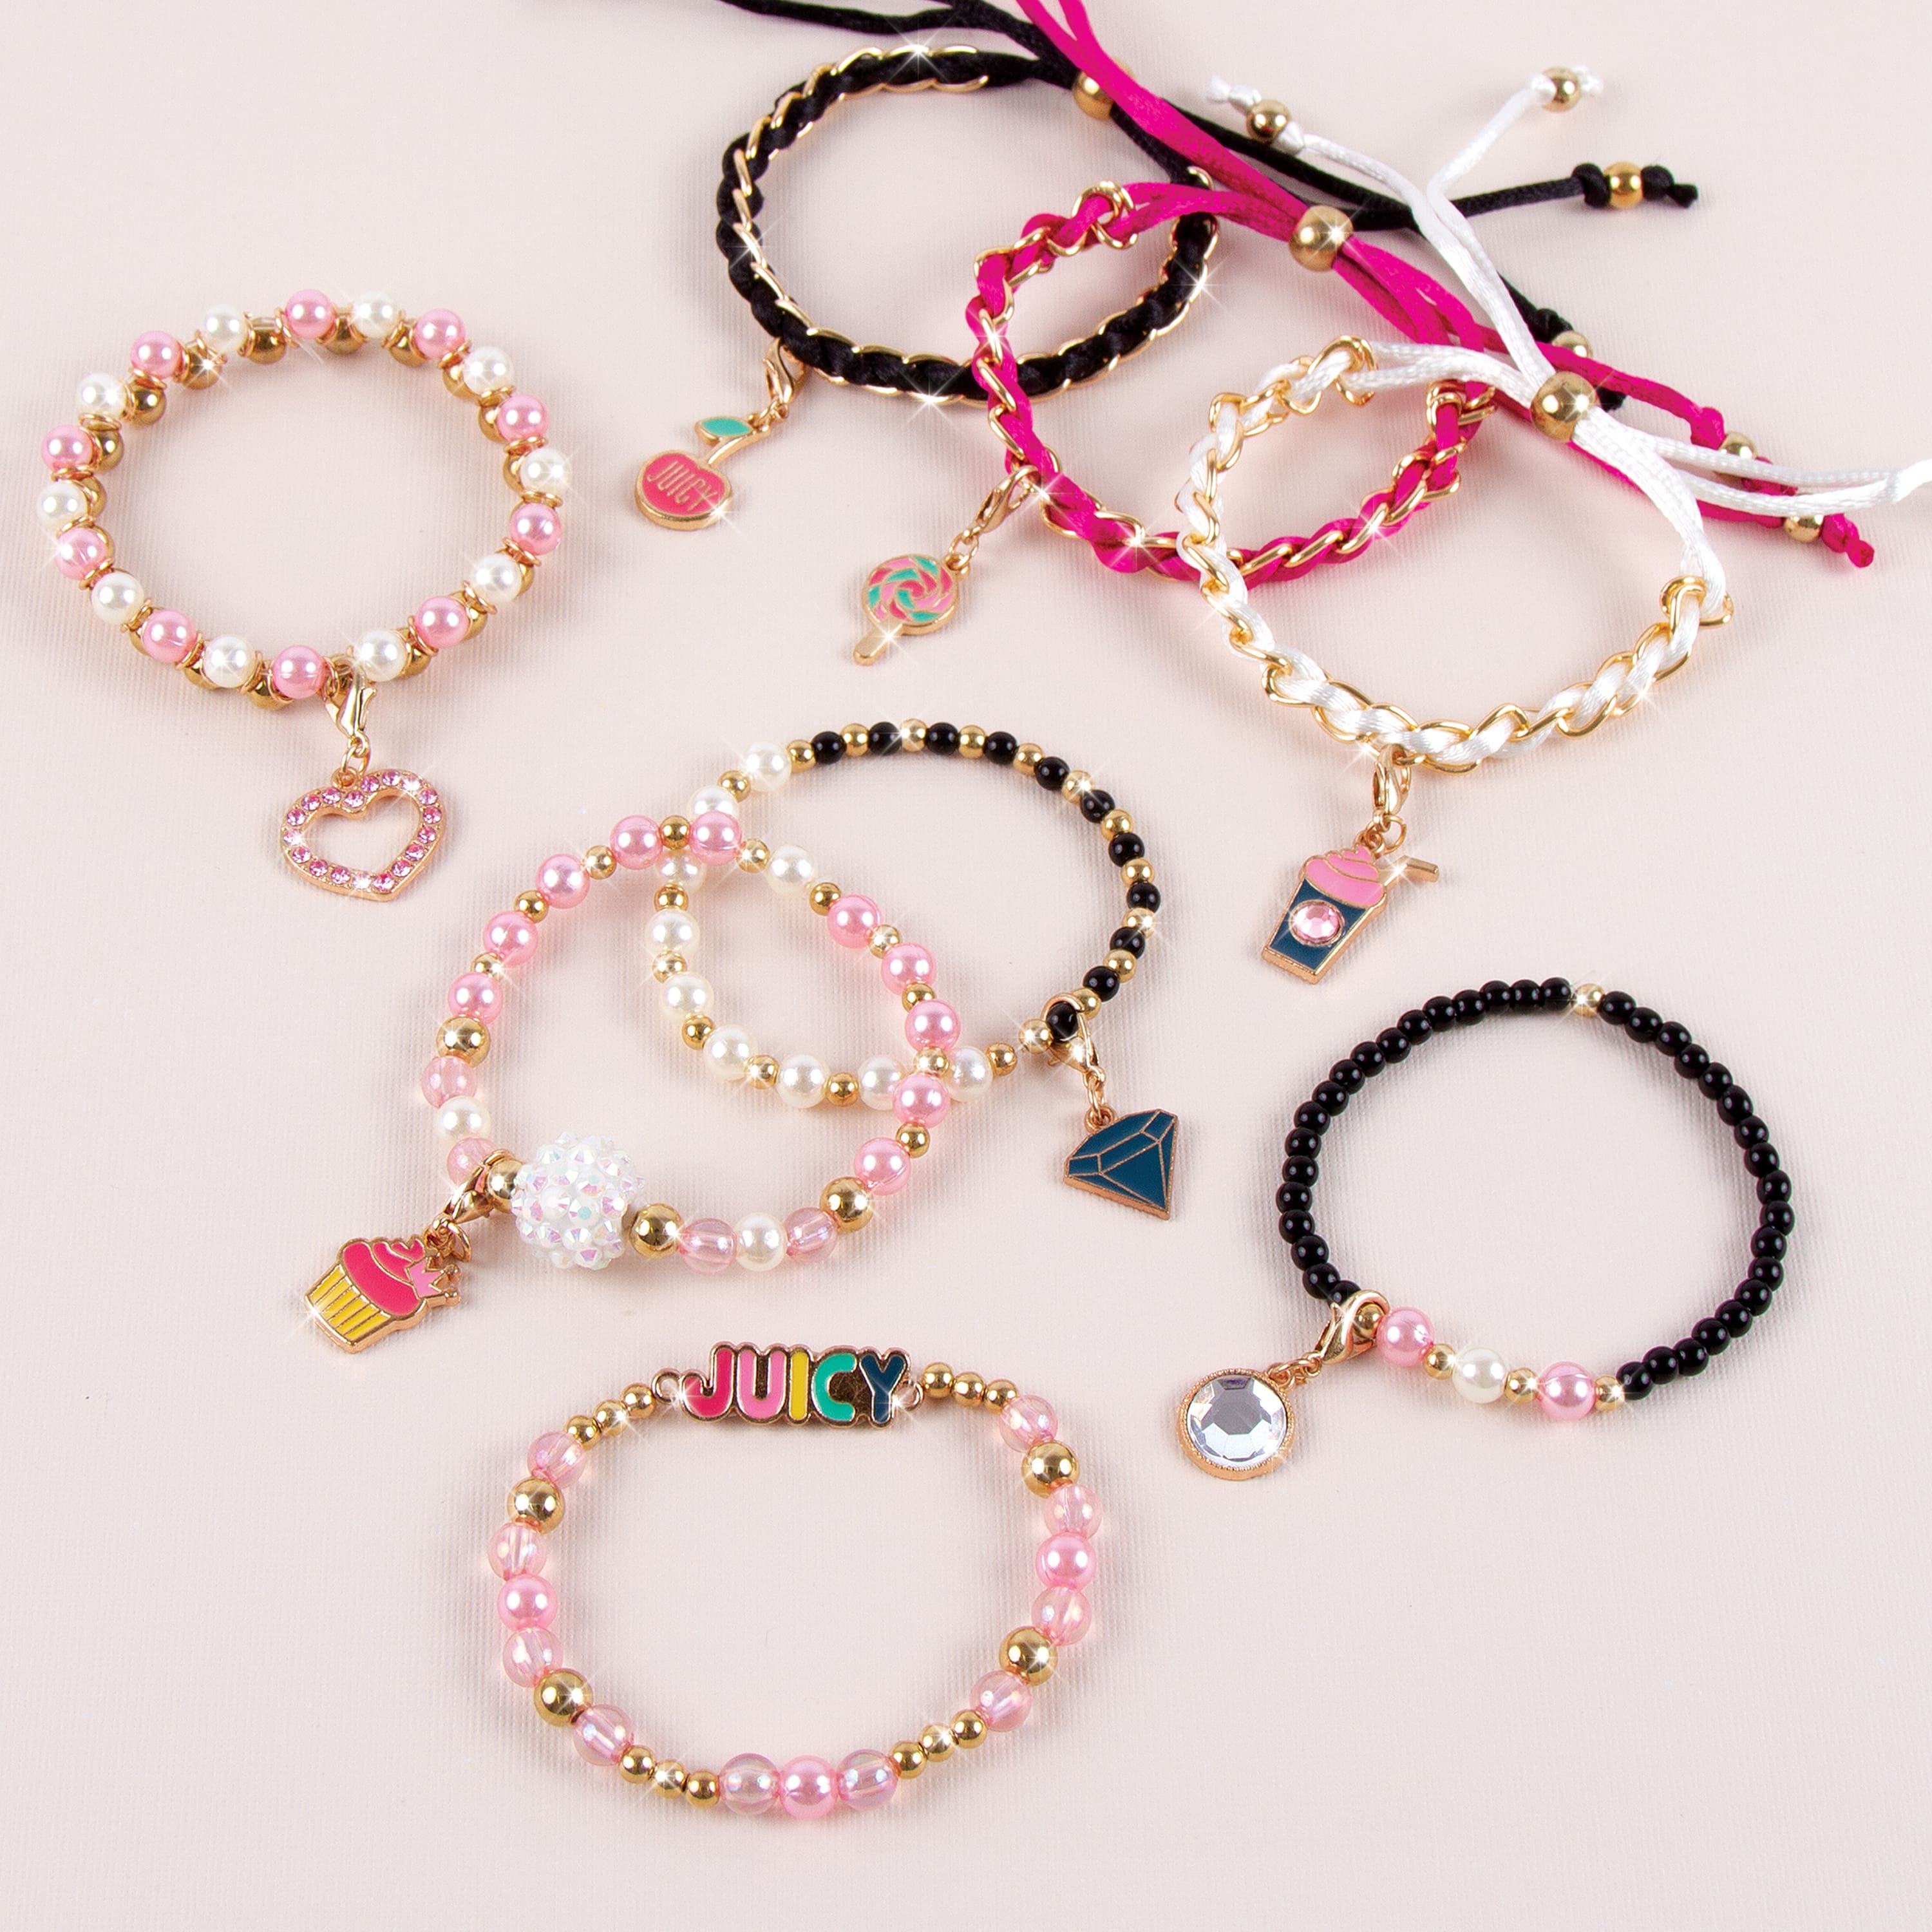 Juicy Couture Pink & Precious Bracelets - Blue - medium - Bed Bath & Beyond  - 32585756